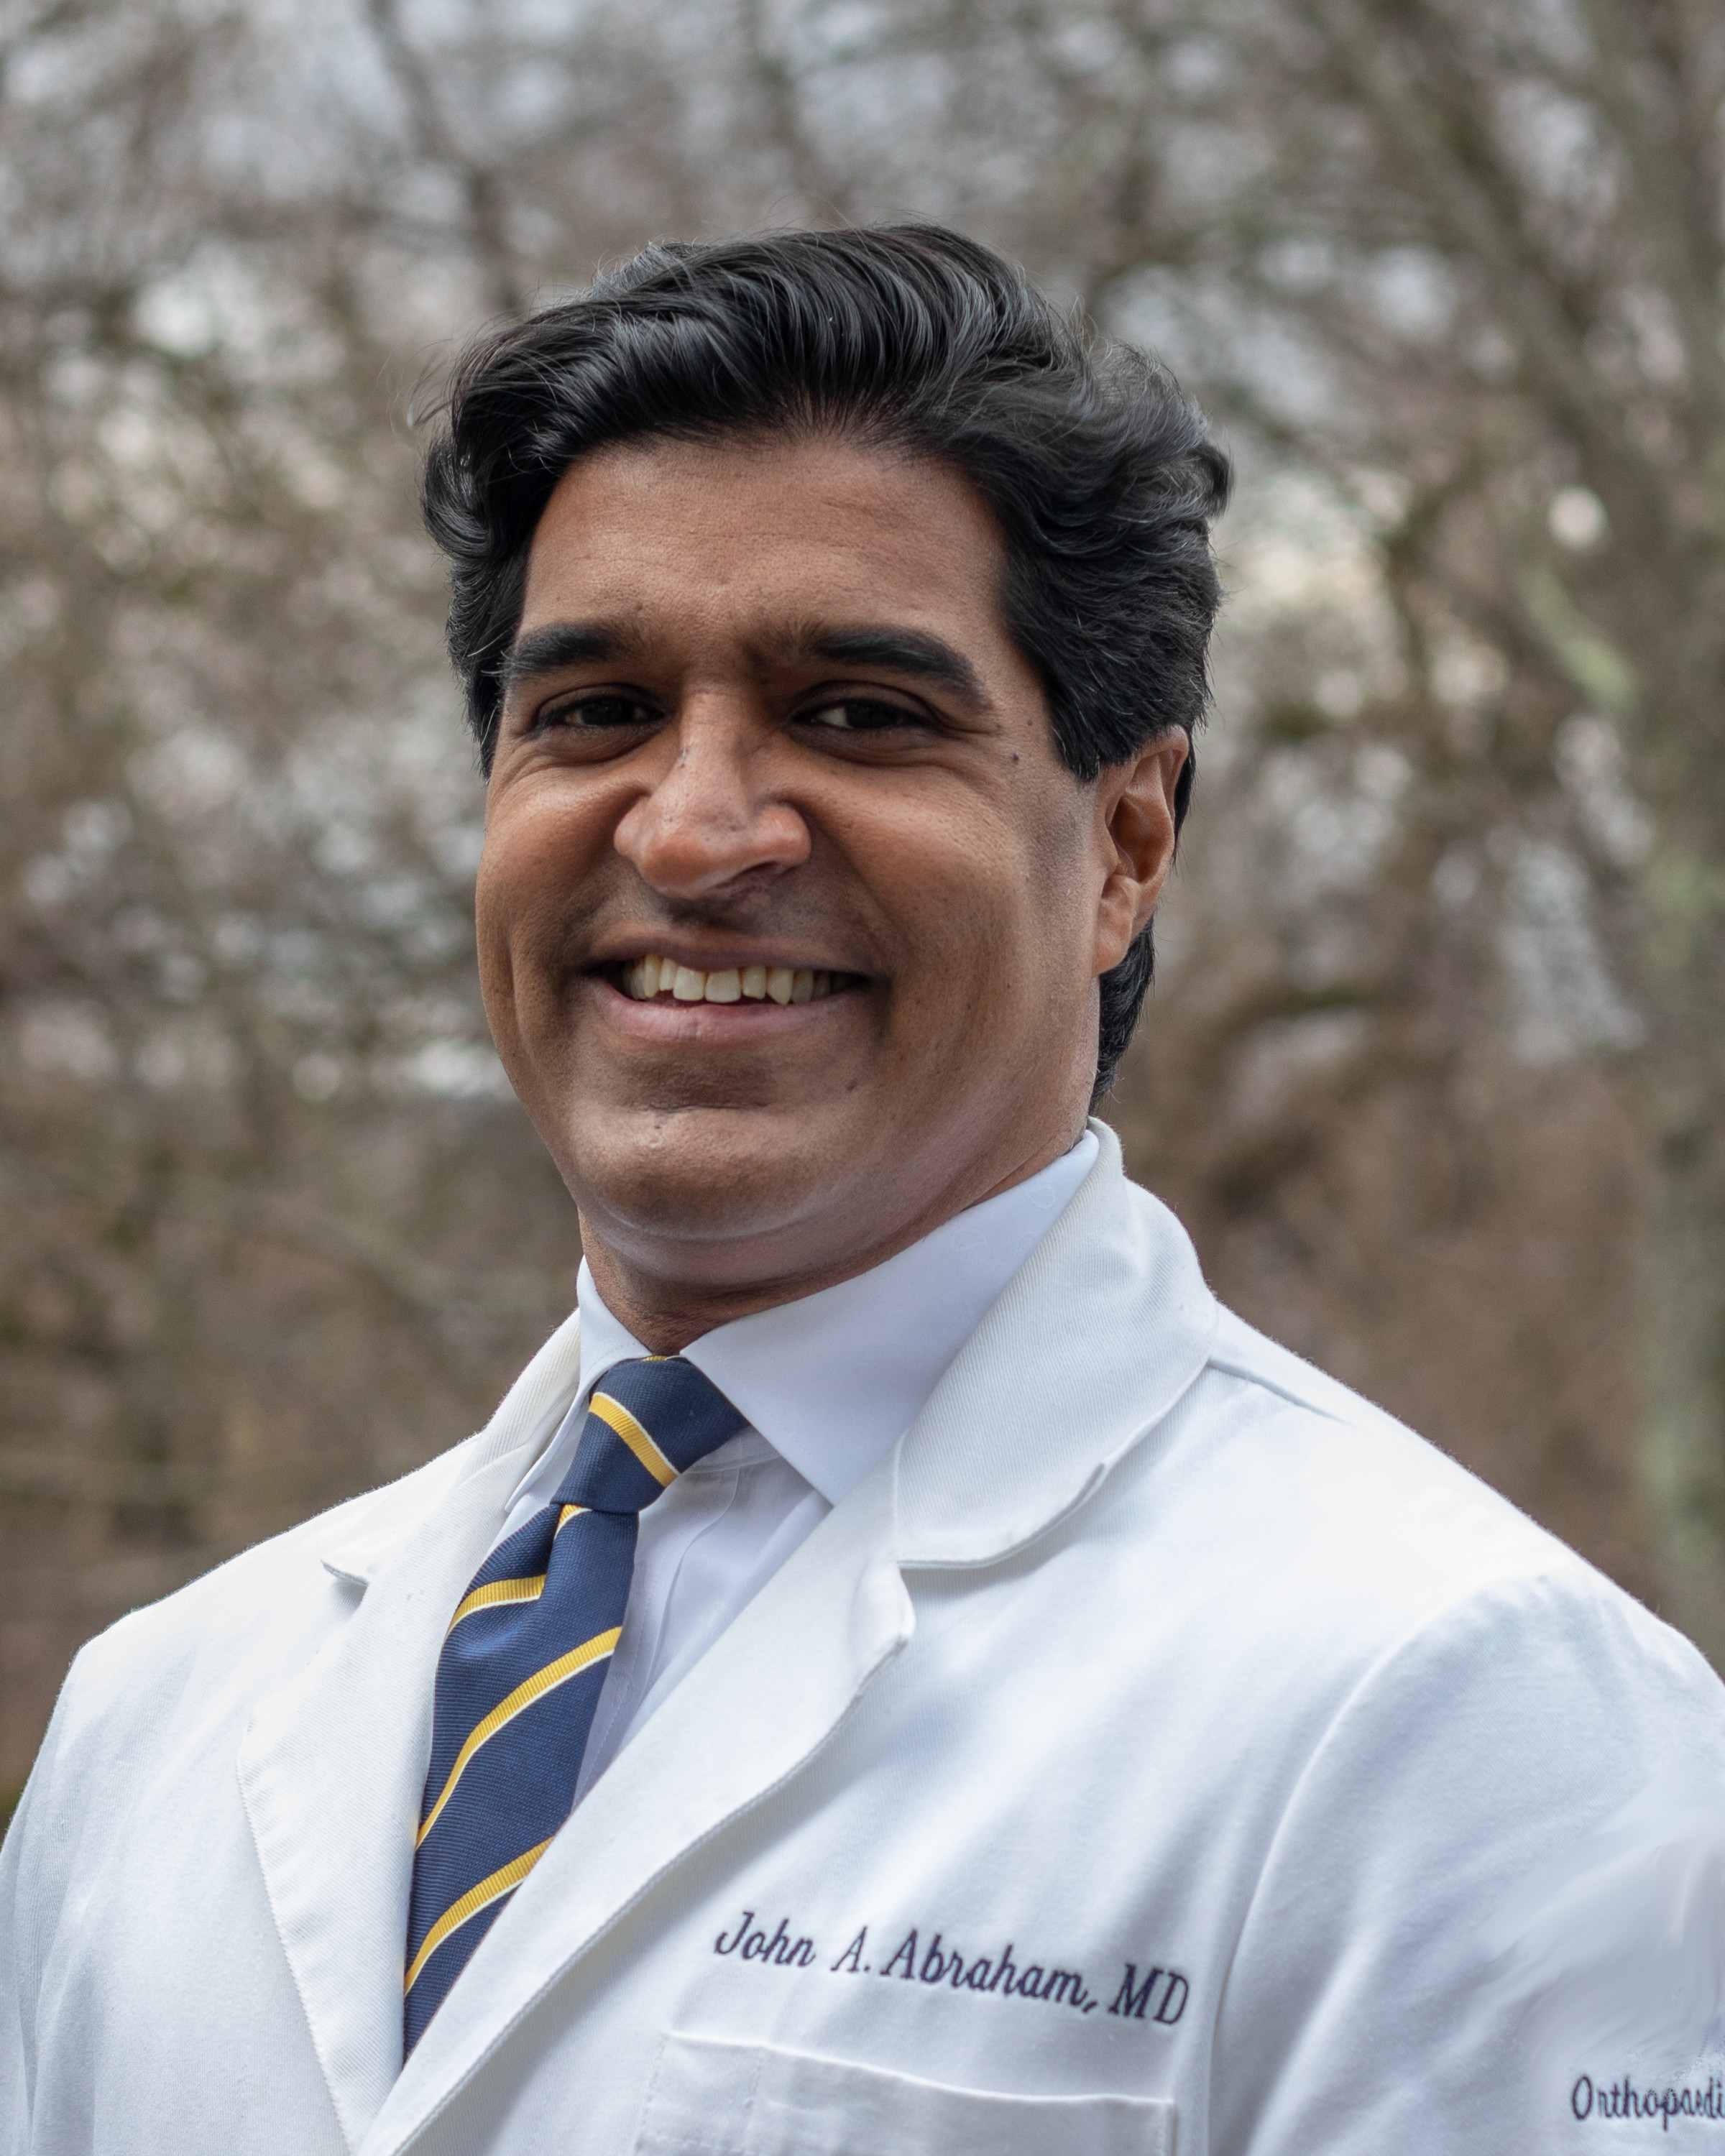 Dr. John A. Abraham, Orthopaedic Oncologist